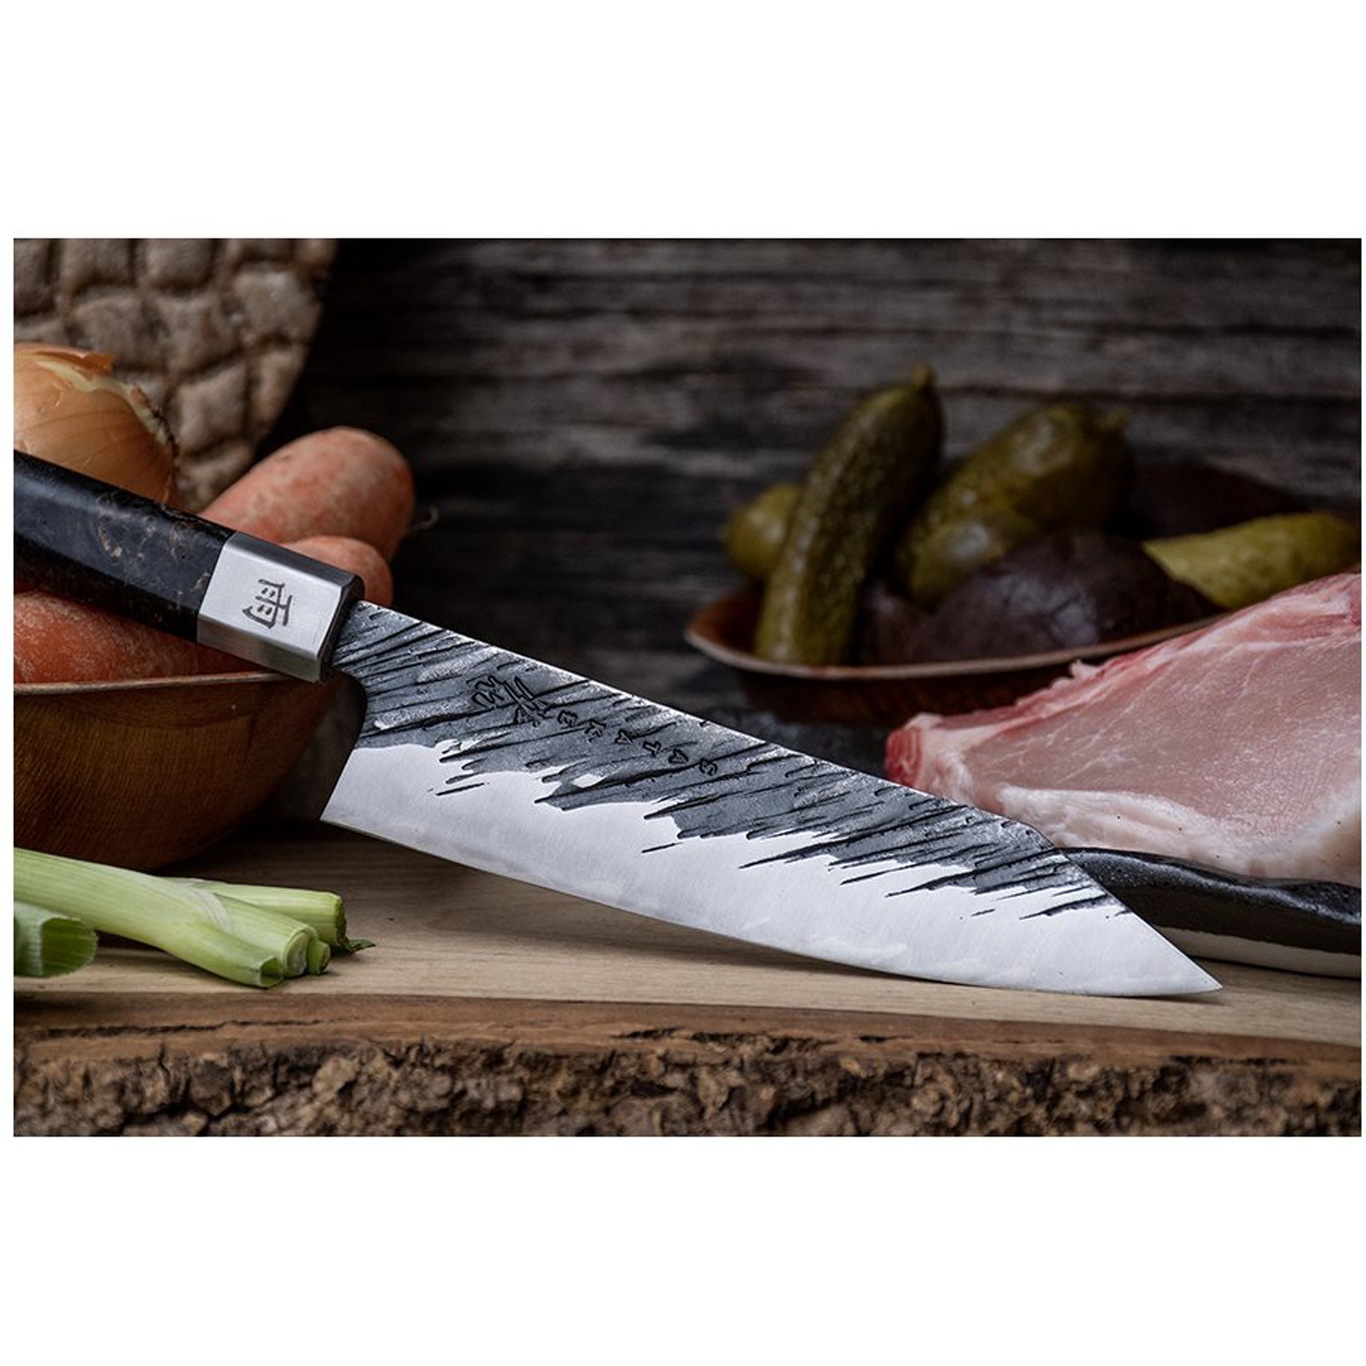 https://royaldesign.com/image/2/satake-ame-bunka-japanese-chef-knife-15-cm-10?w=800&quality=80